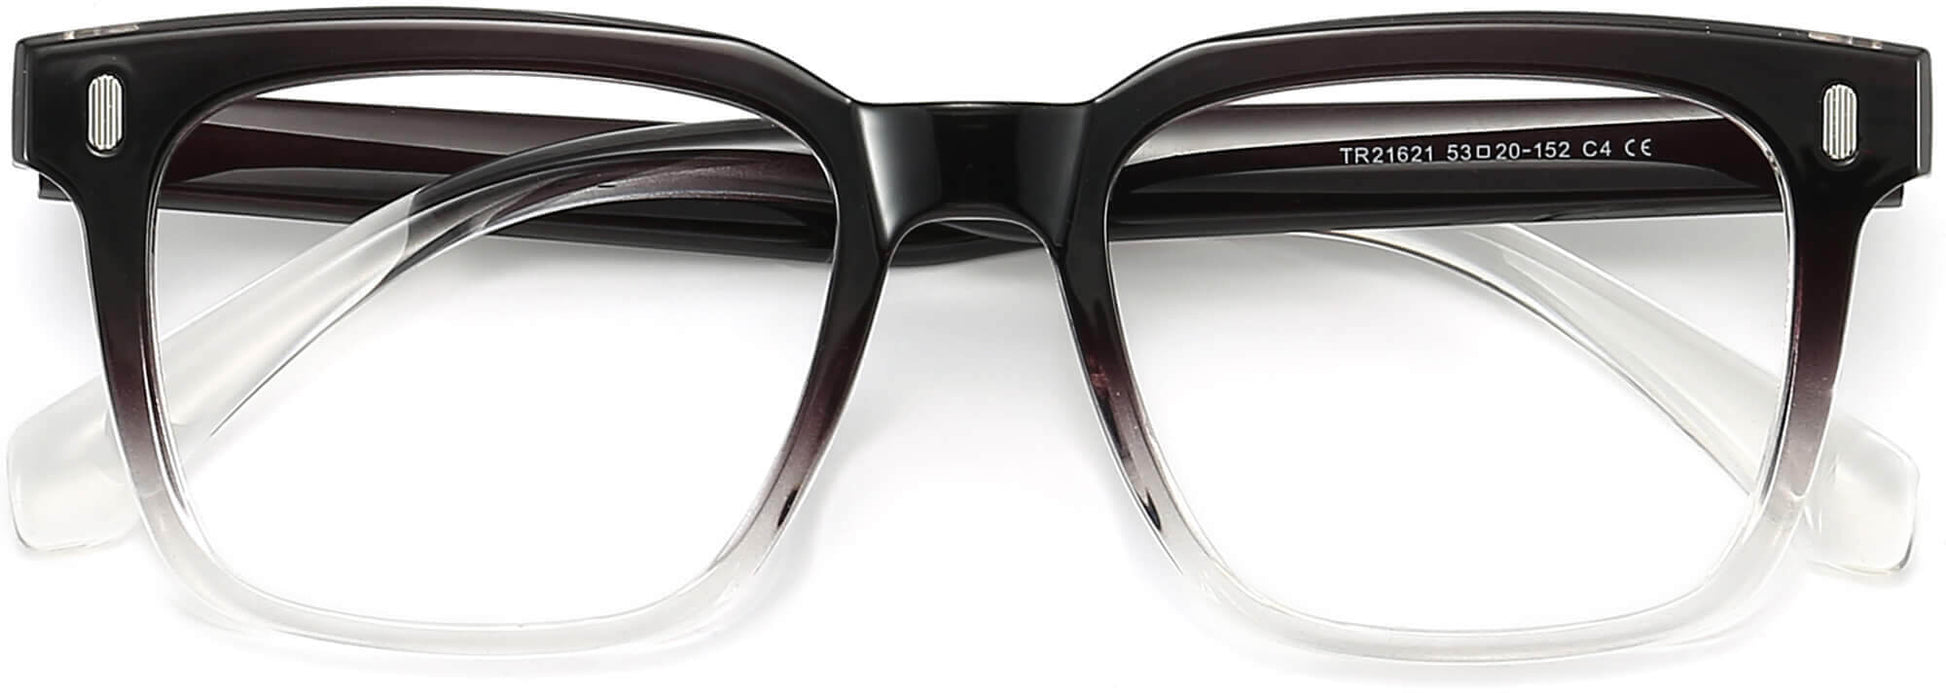 Solomon Square Black Eyeglasses from ANRRI, closed view